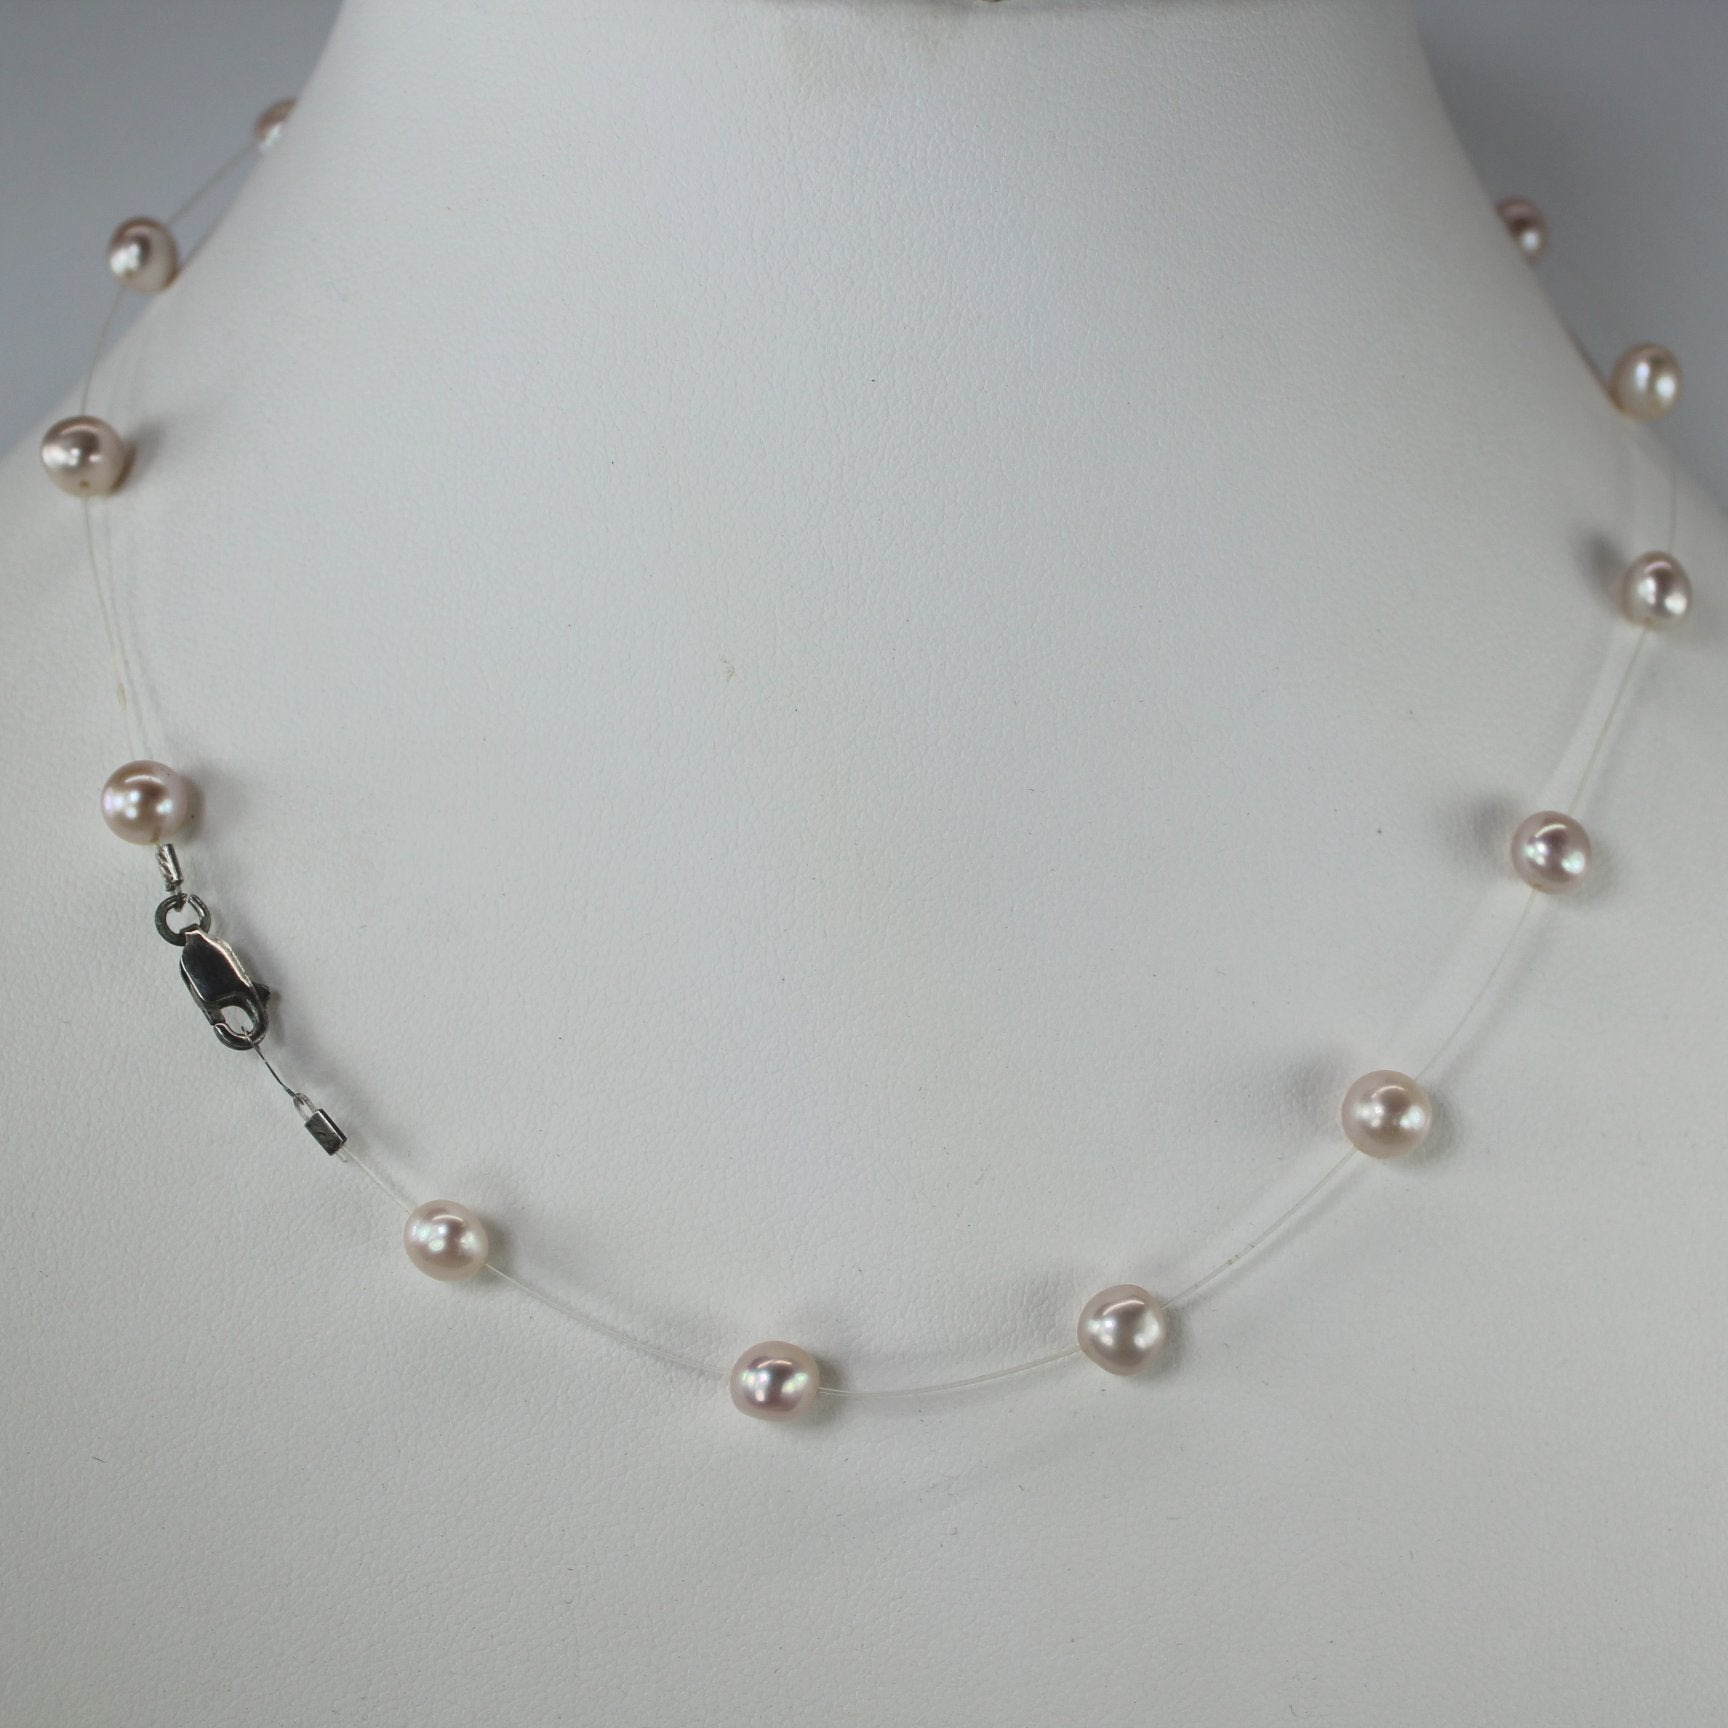 Femme Pink Pearl Necklace Mod Design Marked 925 PBO closure sterling